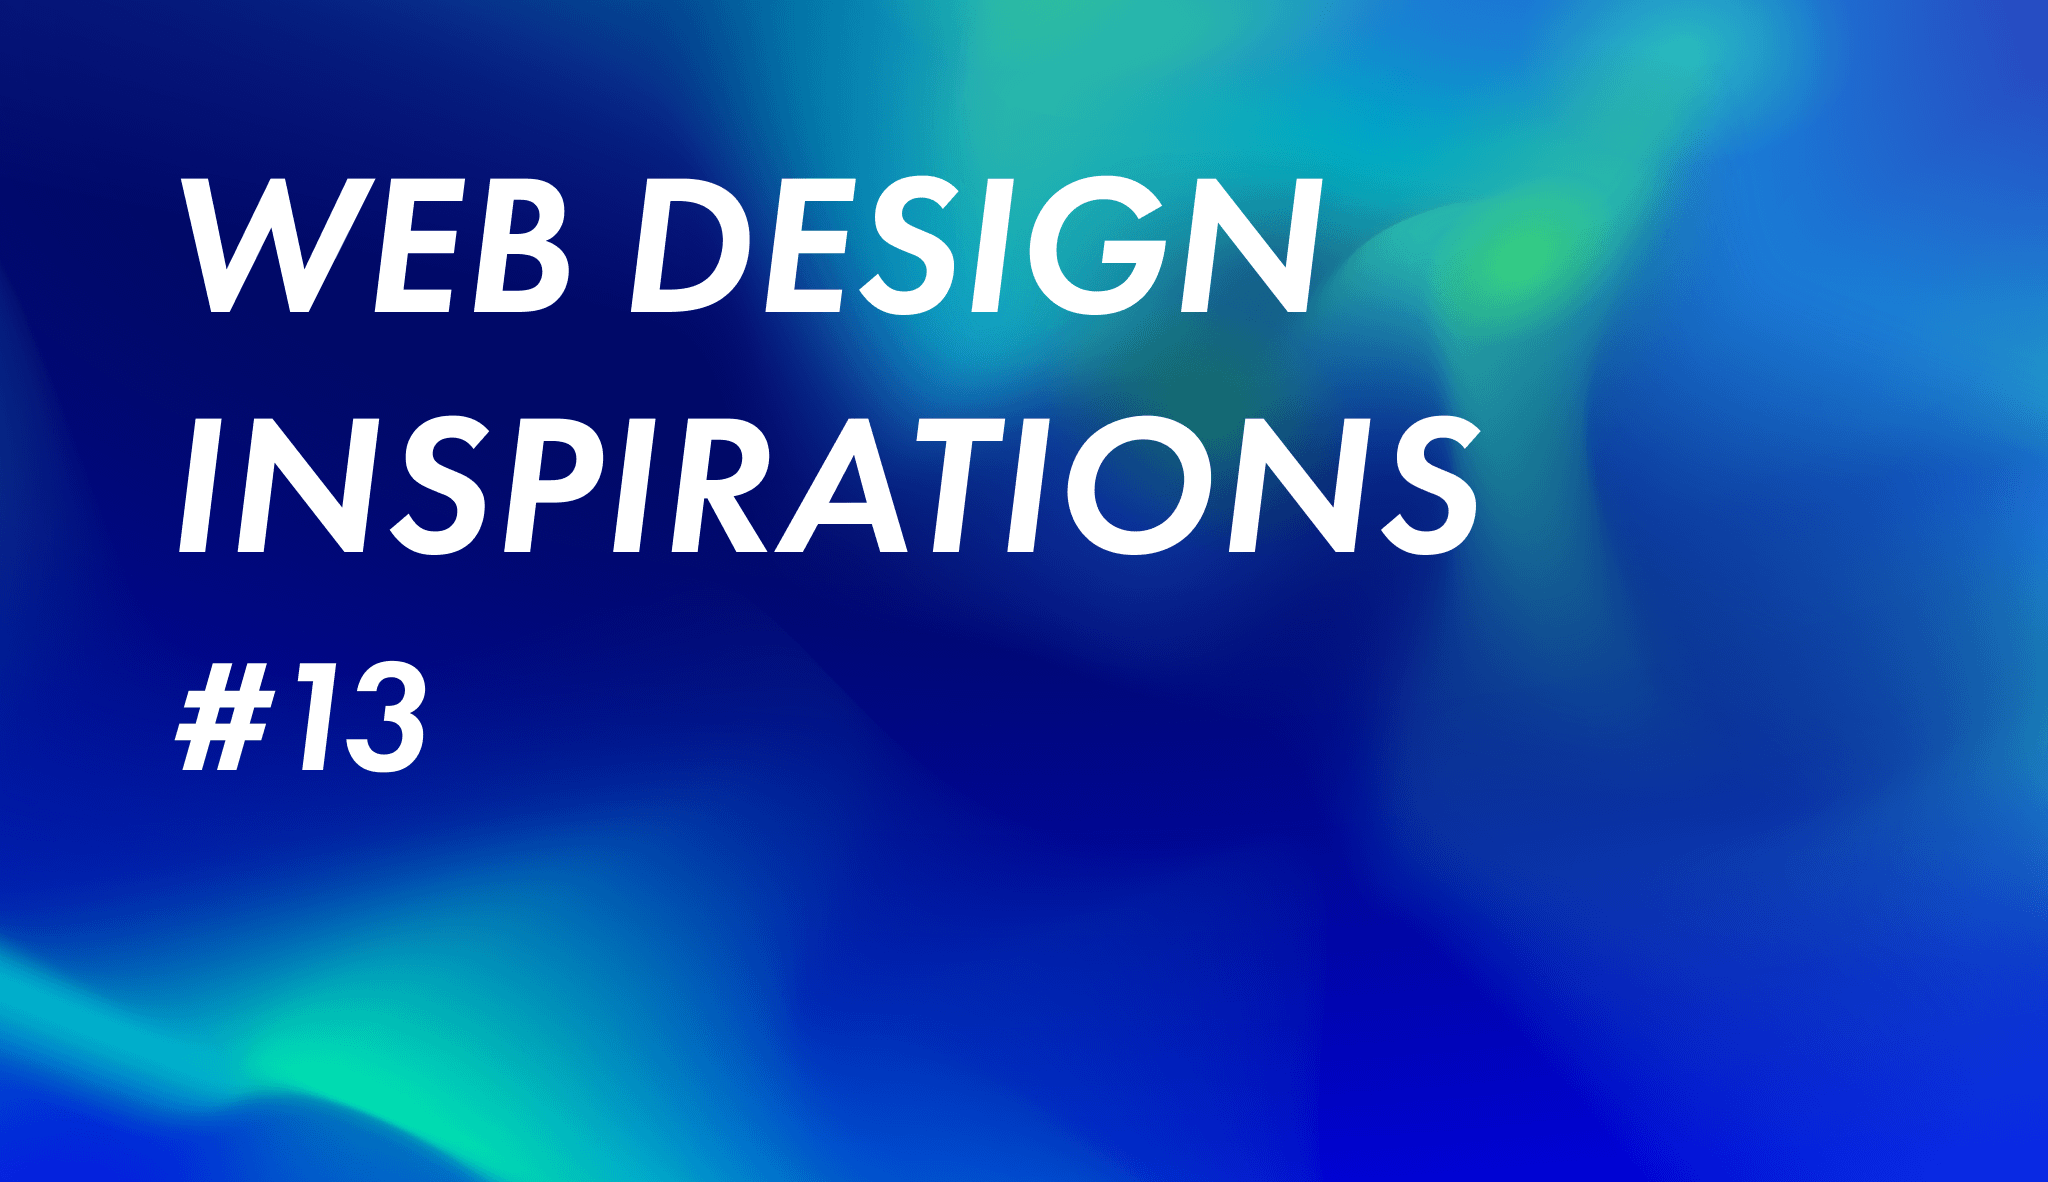 Web Design Inspirations #13